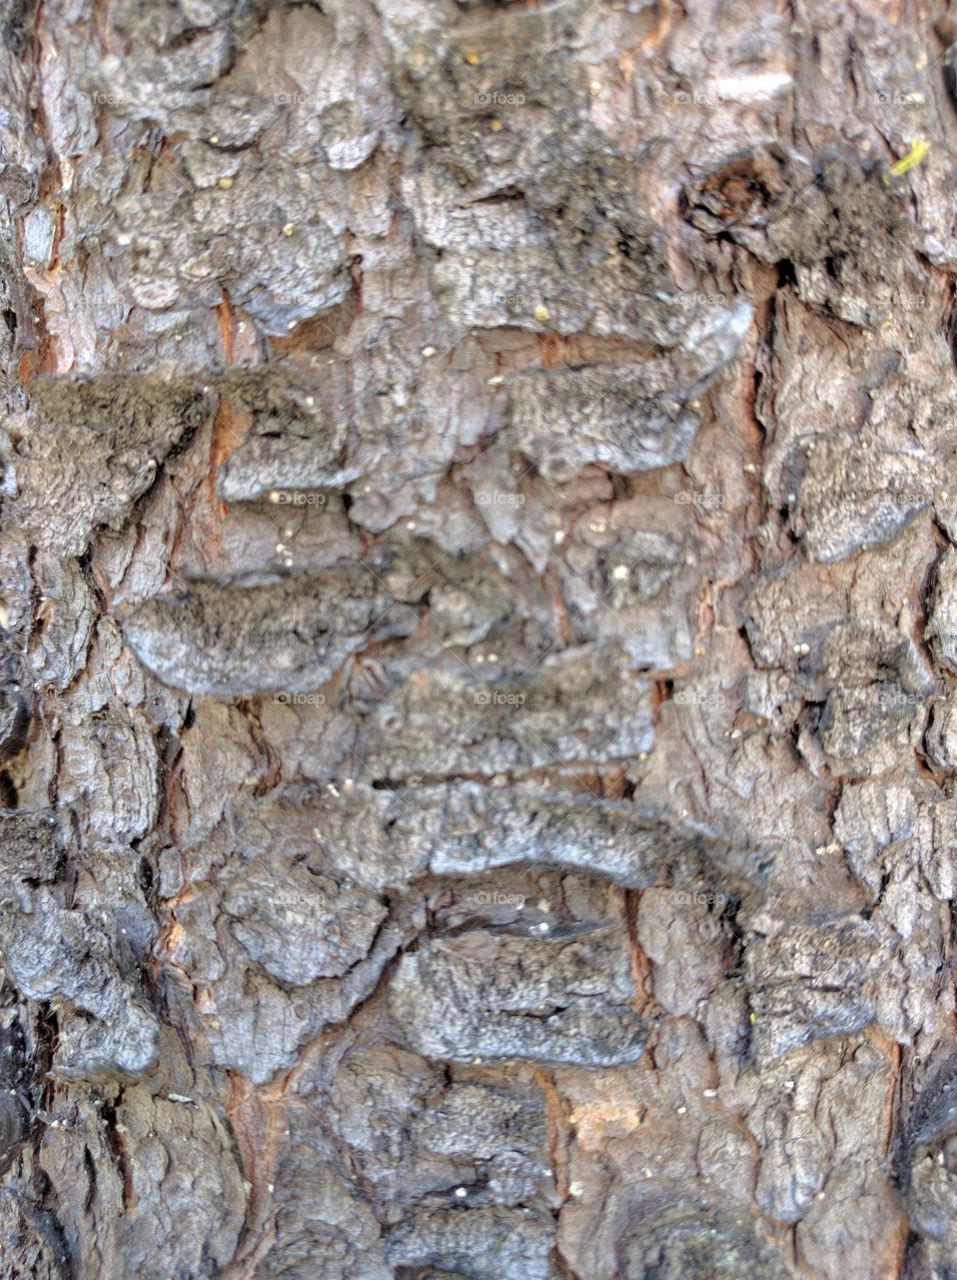 lodgepole pine bark